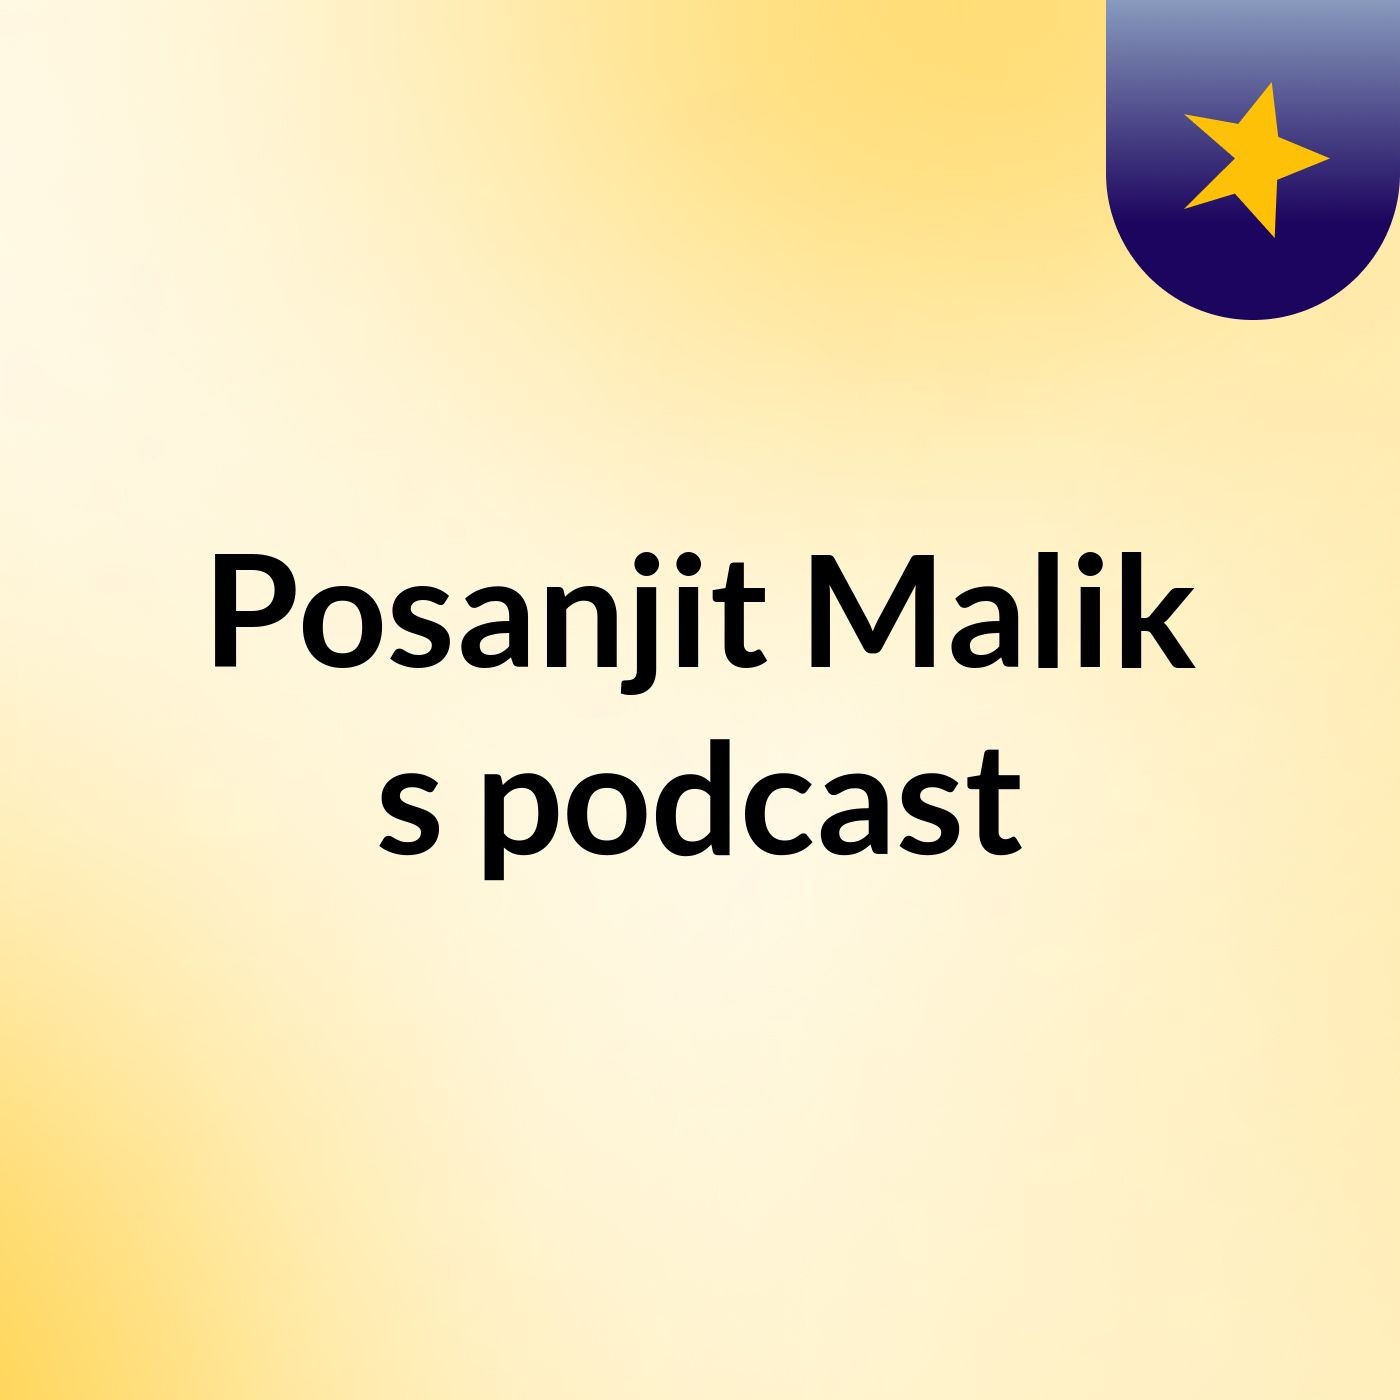 Posanjit Malik's podcast